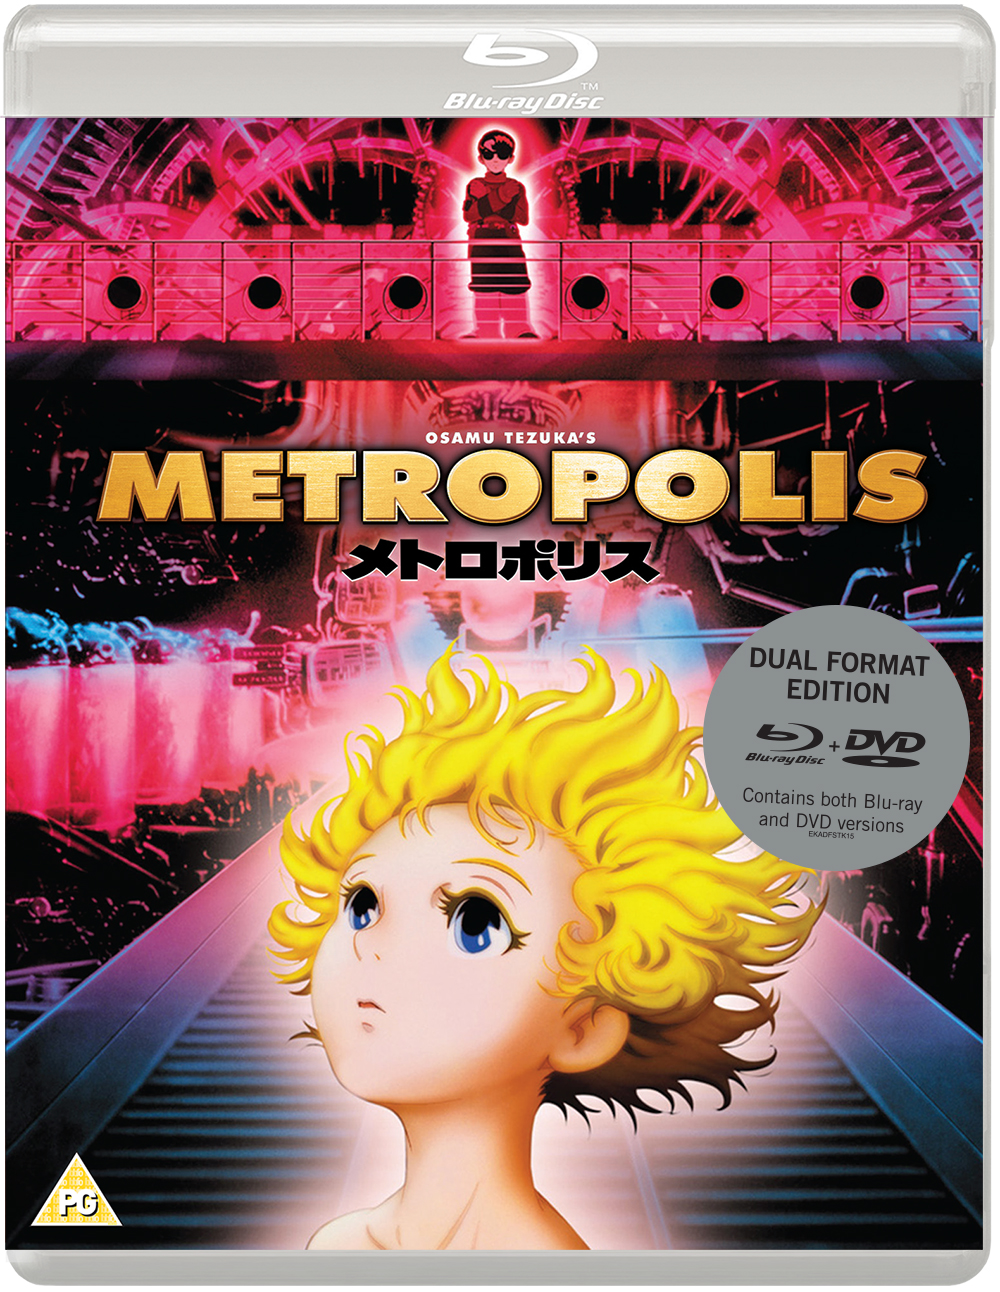 Metropolis Blu-ray review: no, not that one